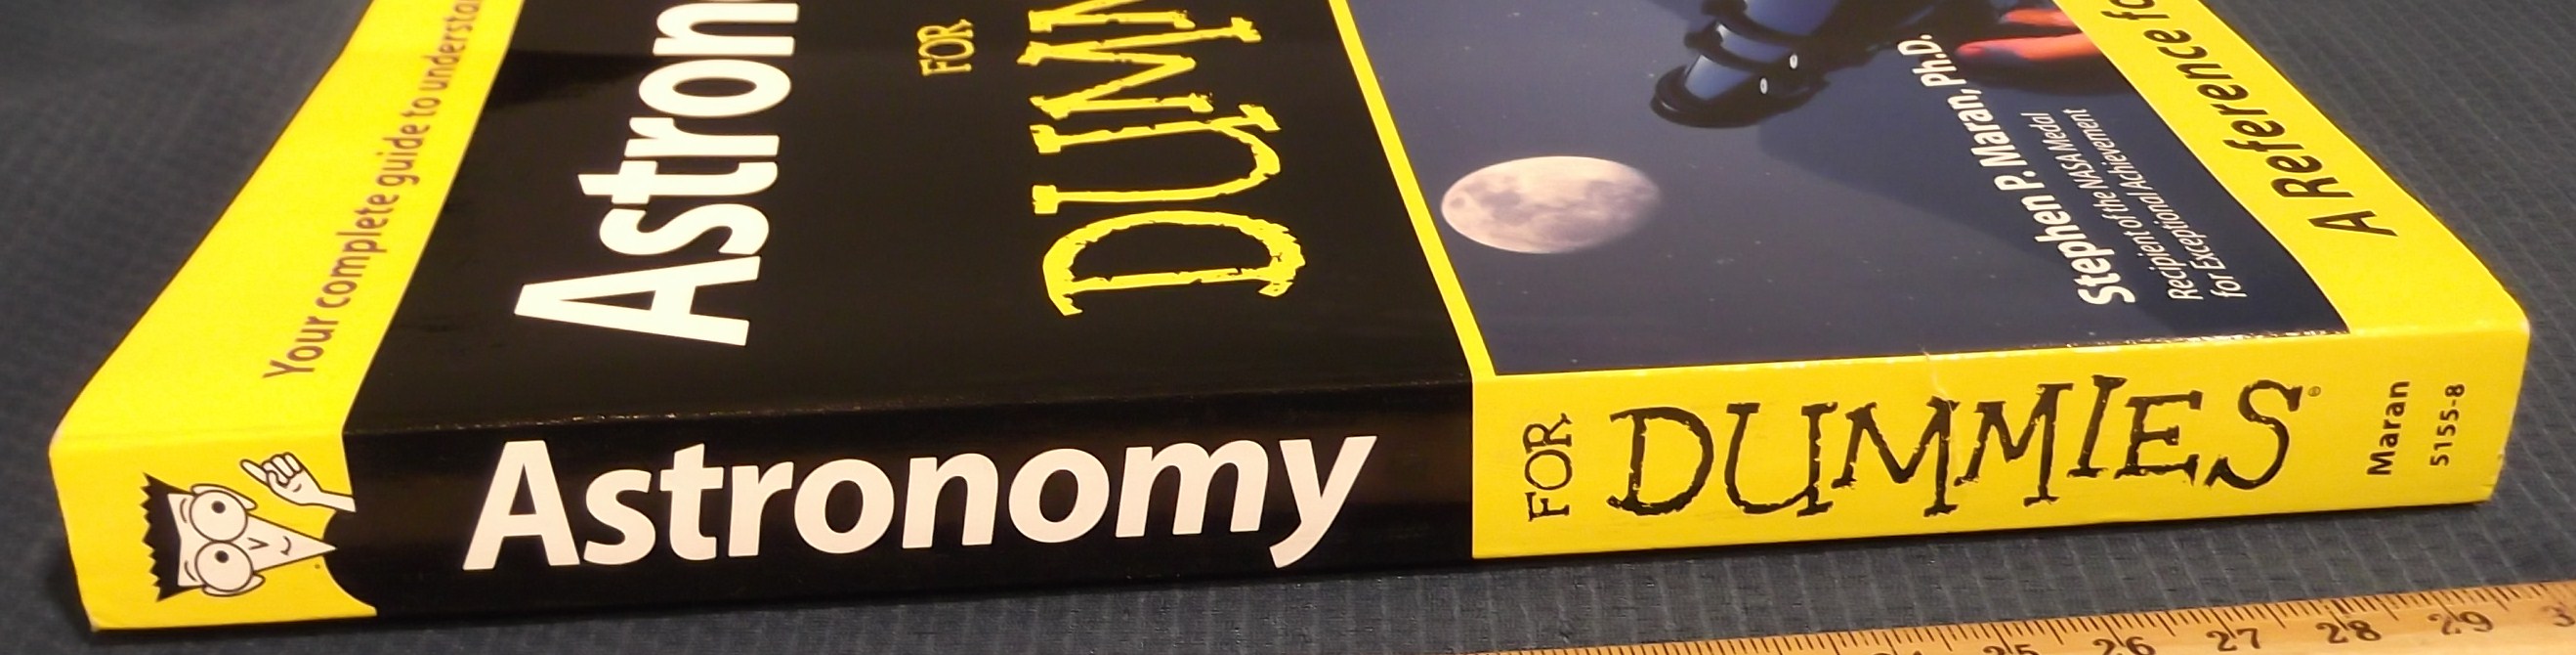 Astronomie Fur Dummies Book Pdf | Free Slam Book Download Pdf